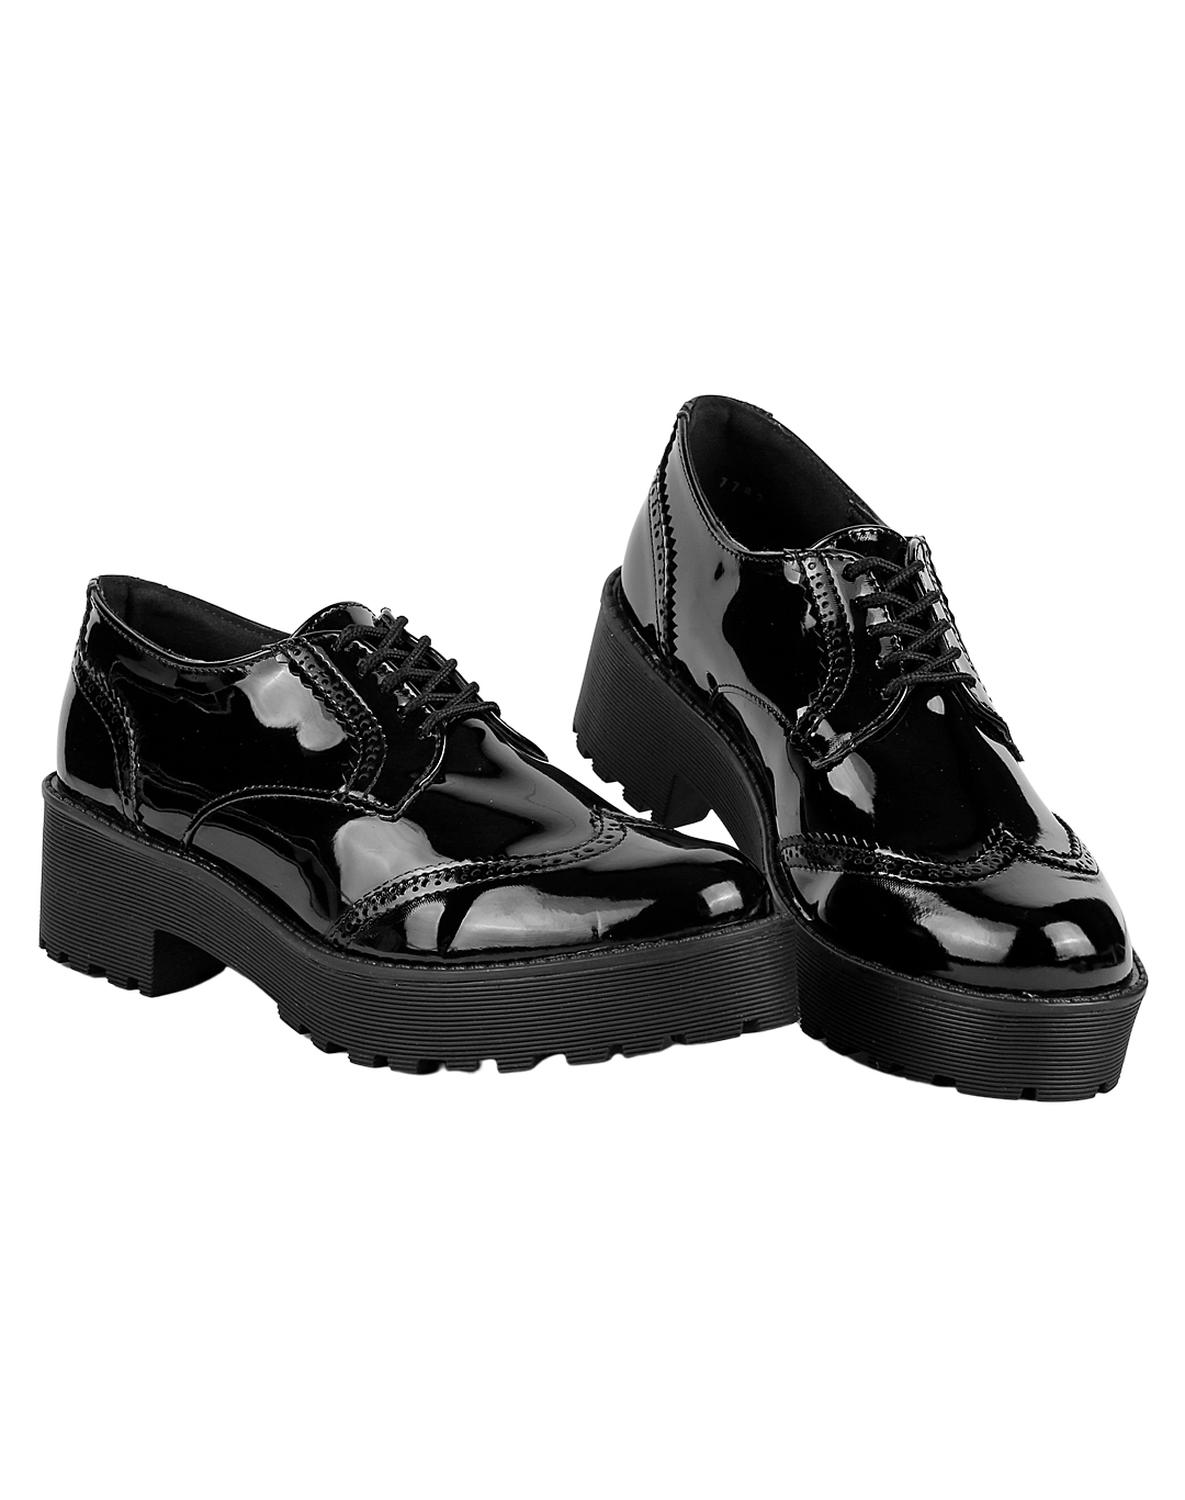 Zapato Casual Mujer Negro Tipo Charol Stfashion 08003800